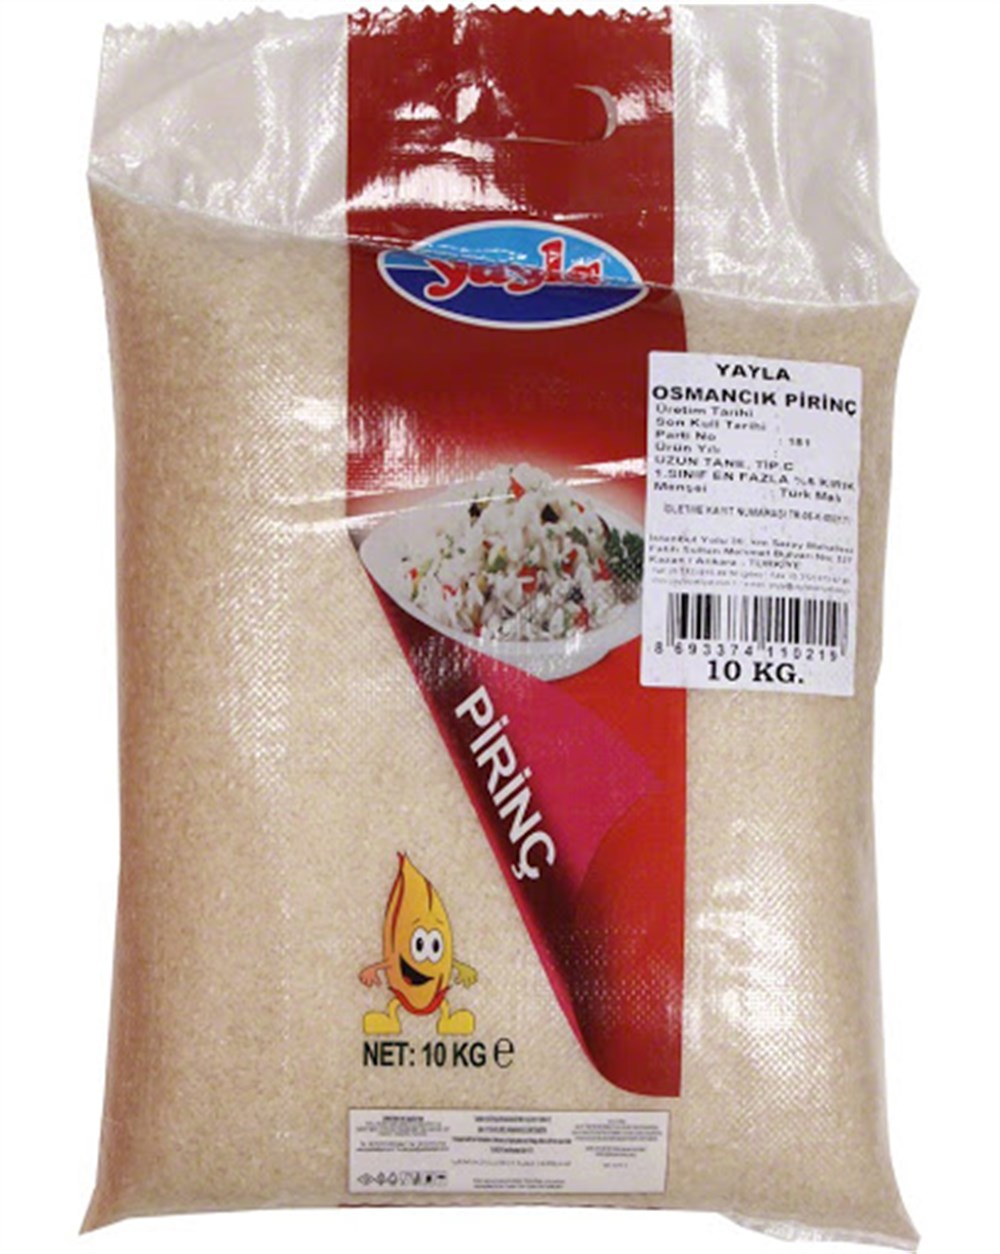 resm Yayla Osmancık Pirinç 10 kg